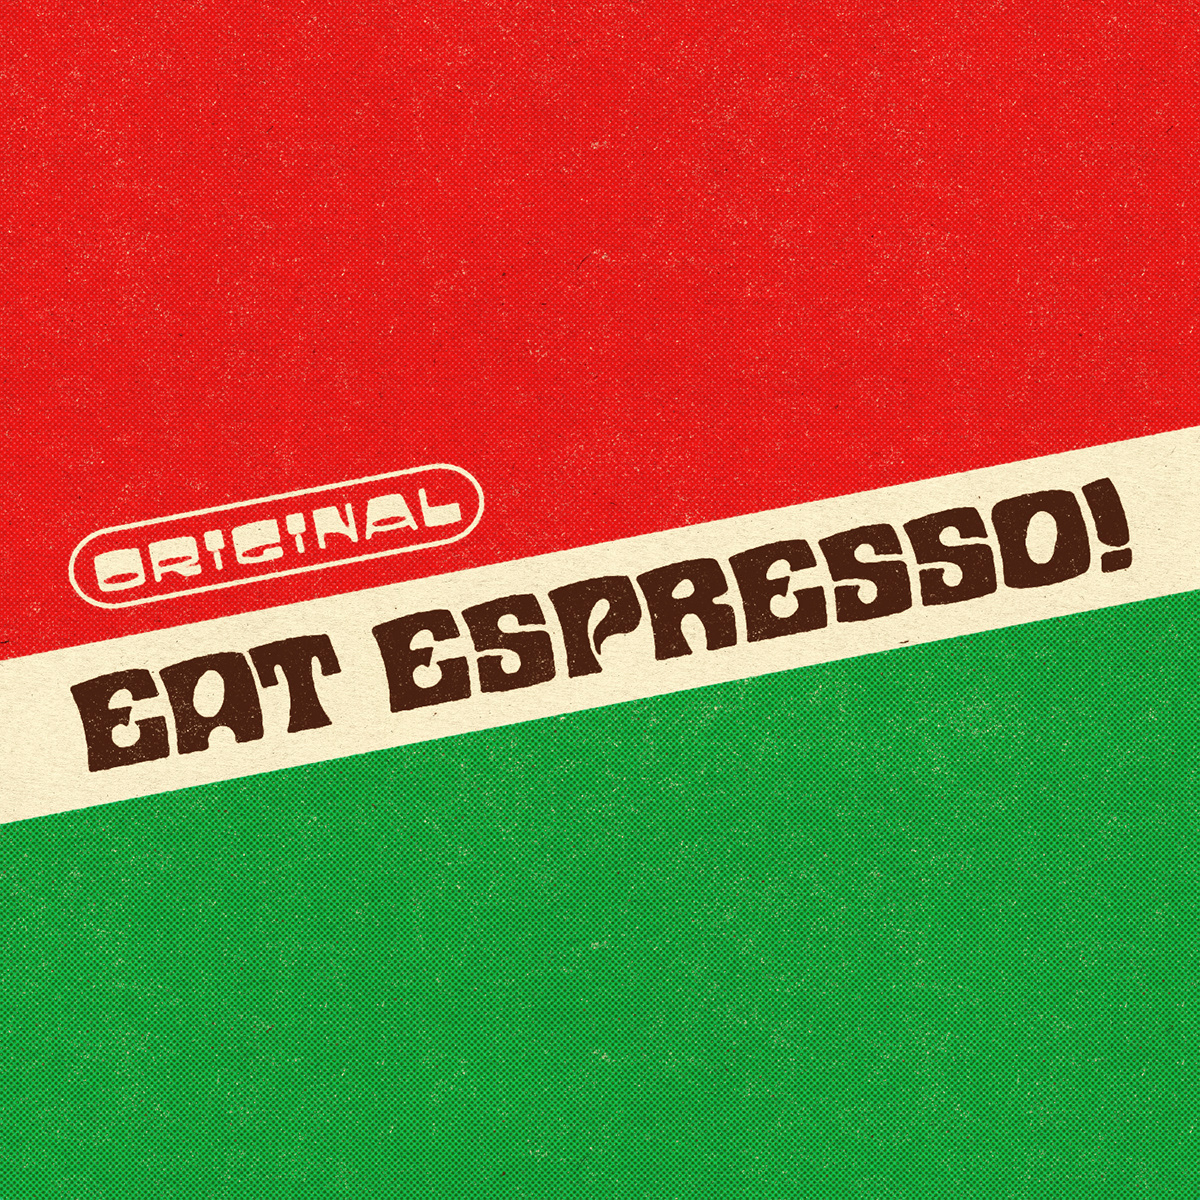 Eat Espresso
Branding + Packaging Design